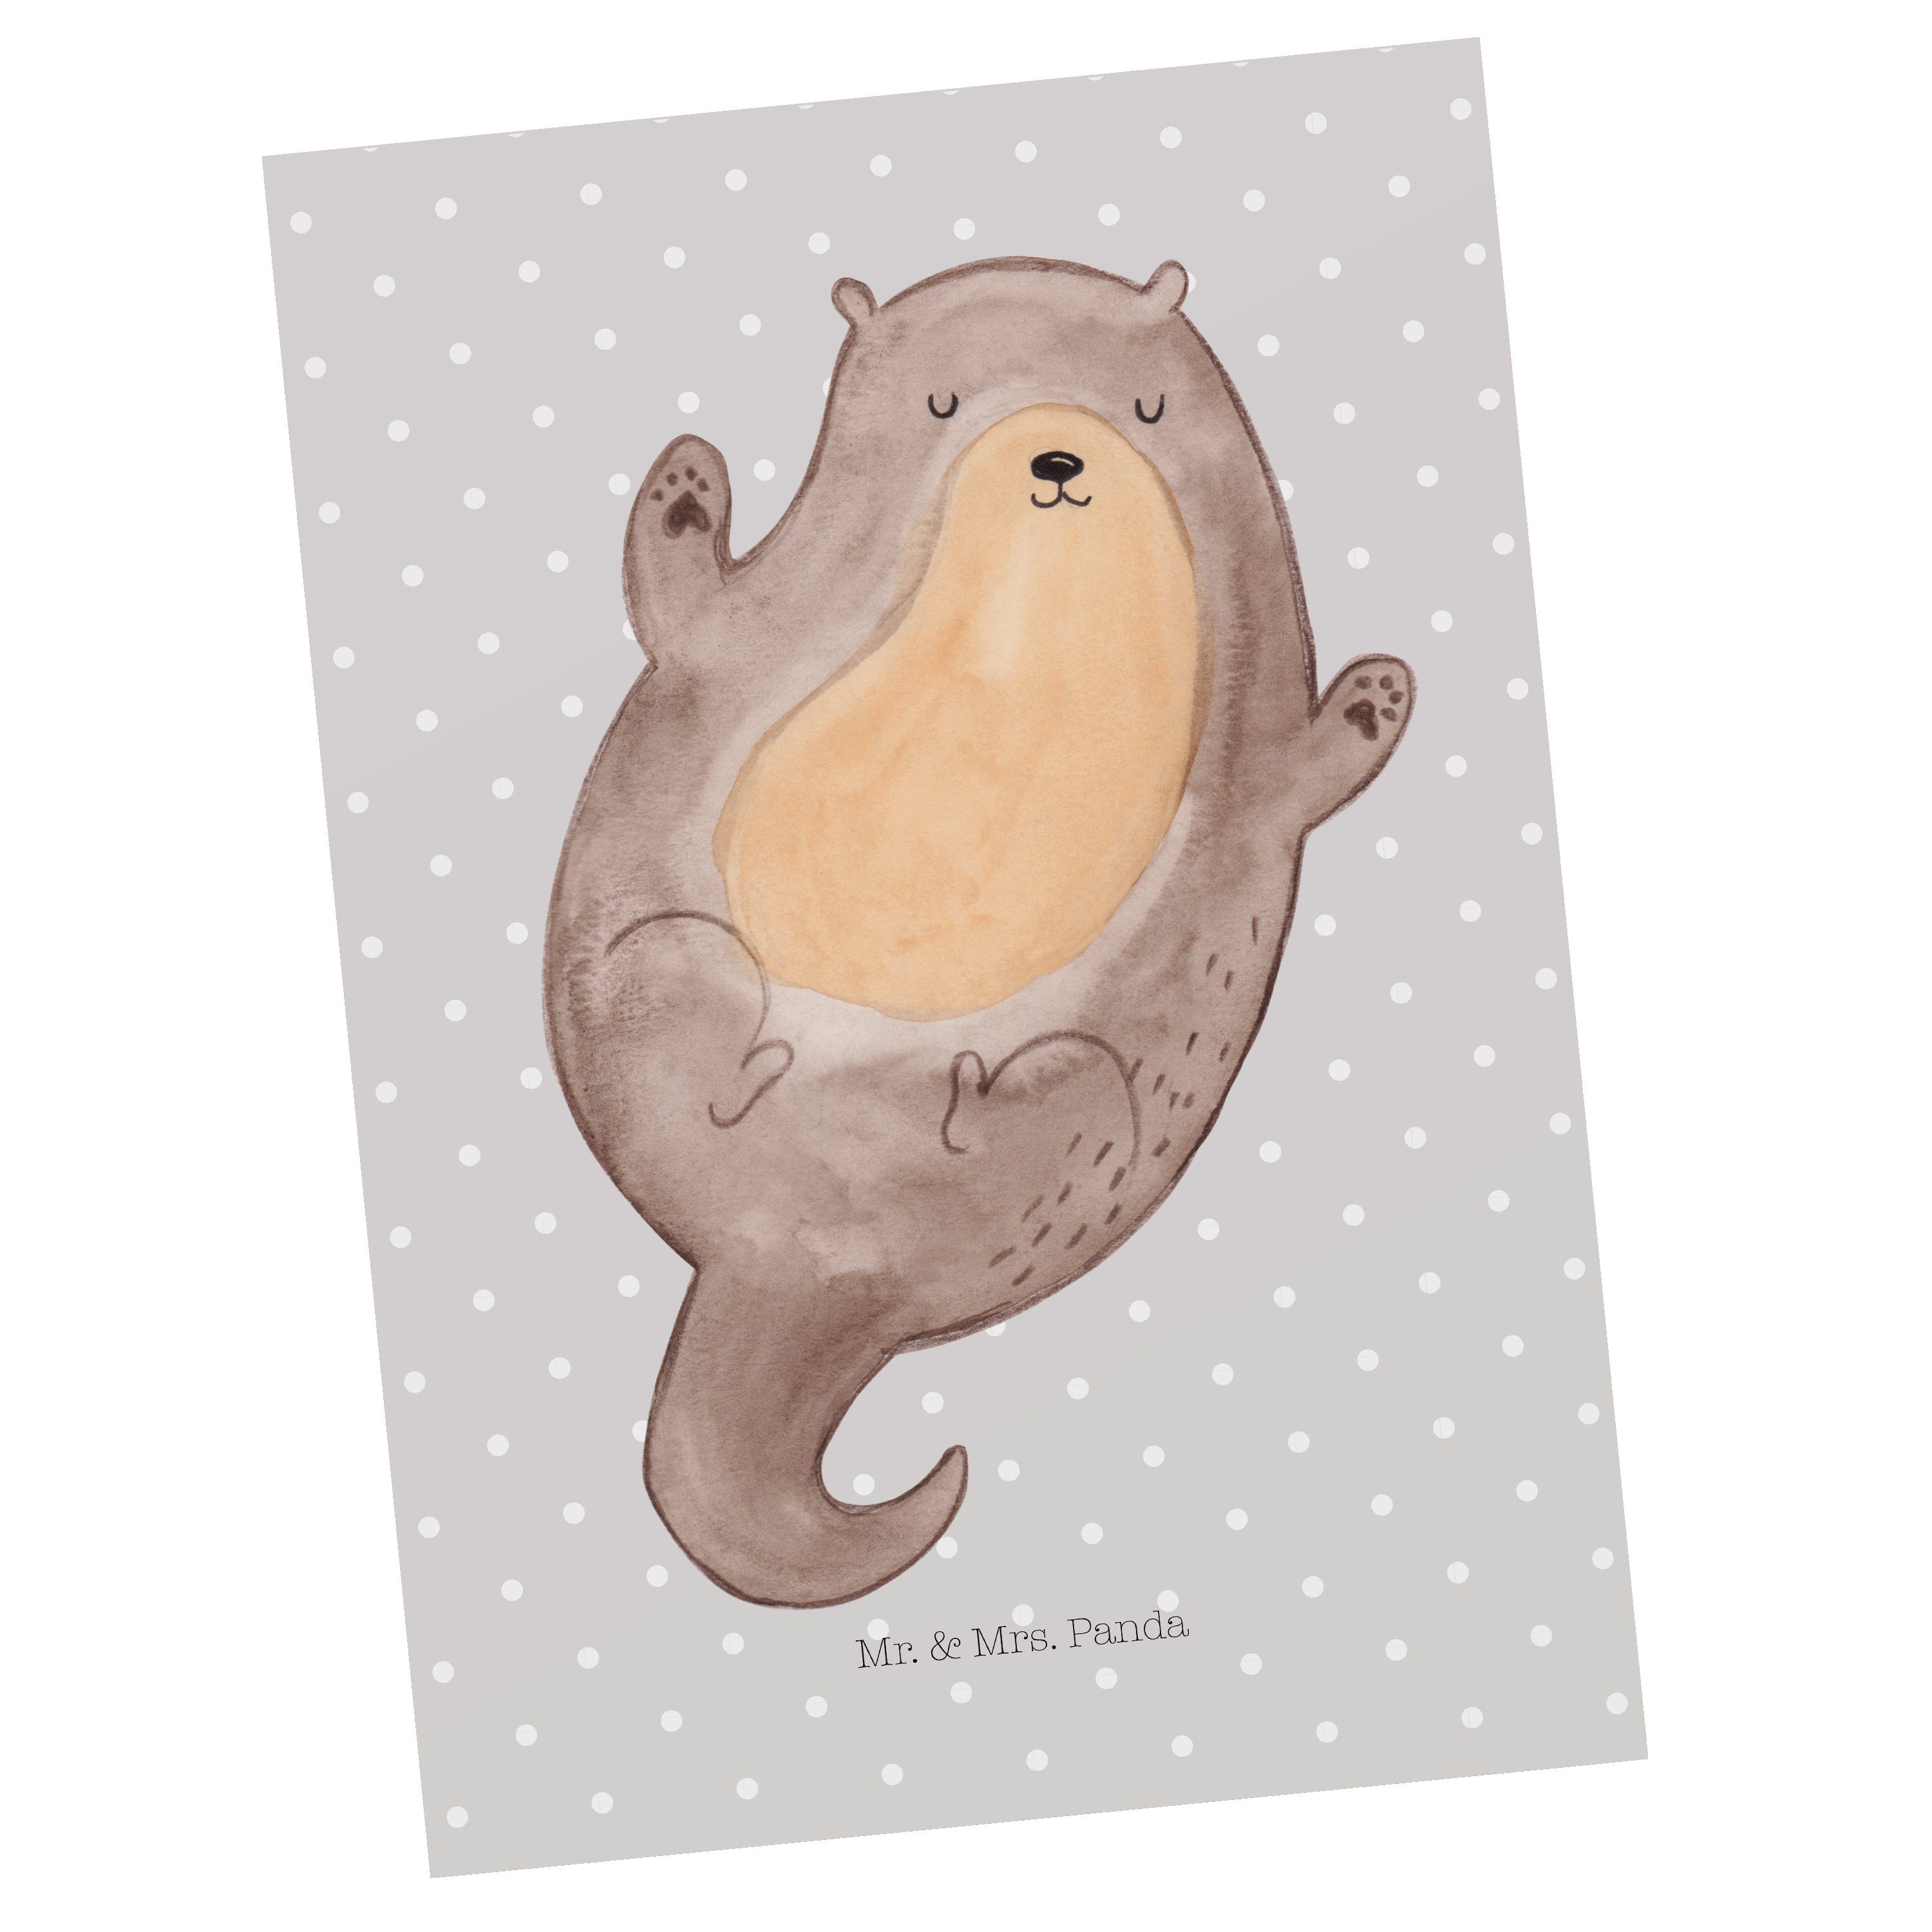 Mr. & Mrs. Panda Postkarte Otter Umarmen - Grau Pastell - Geschenk, Dankeskarte, Fischotter, Ei